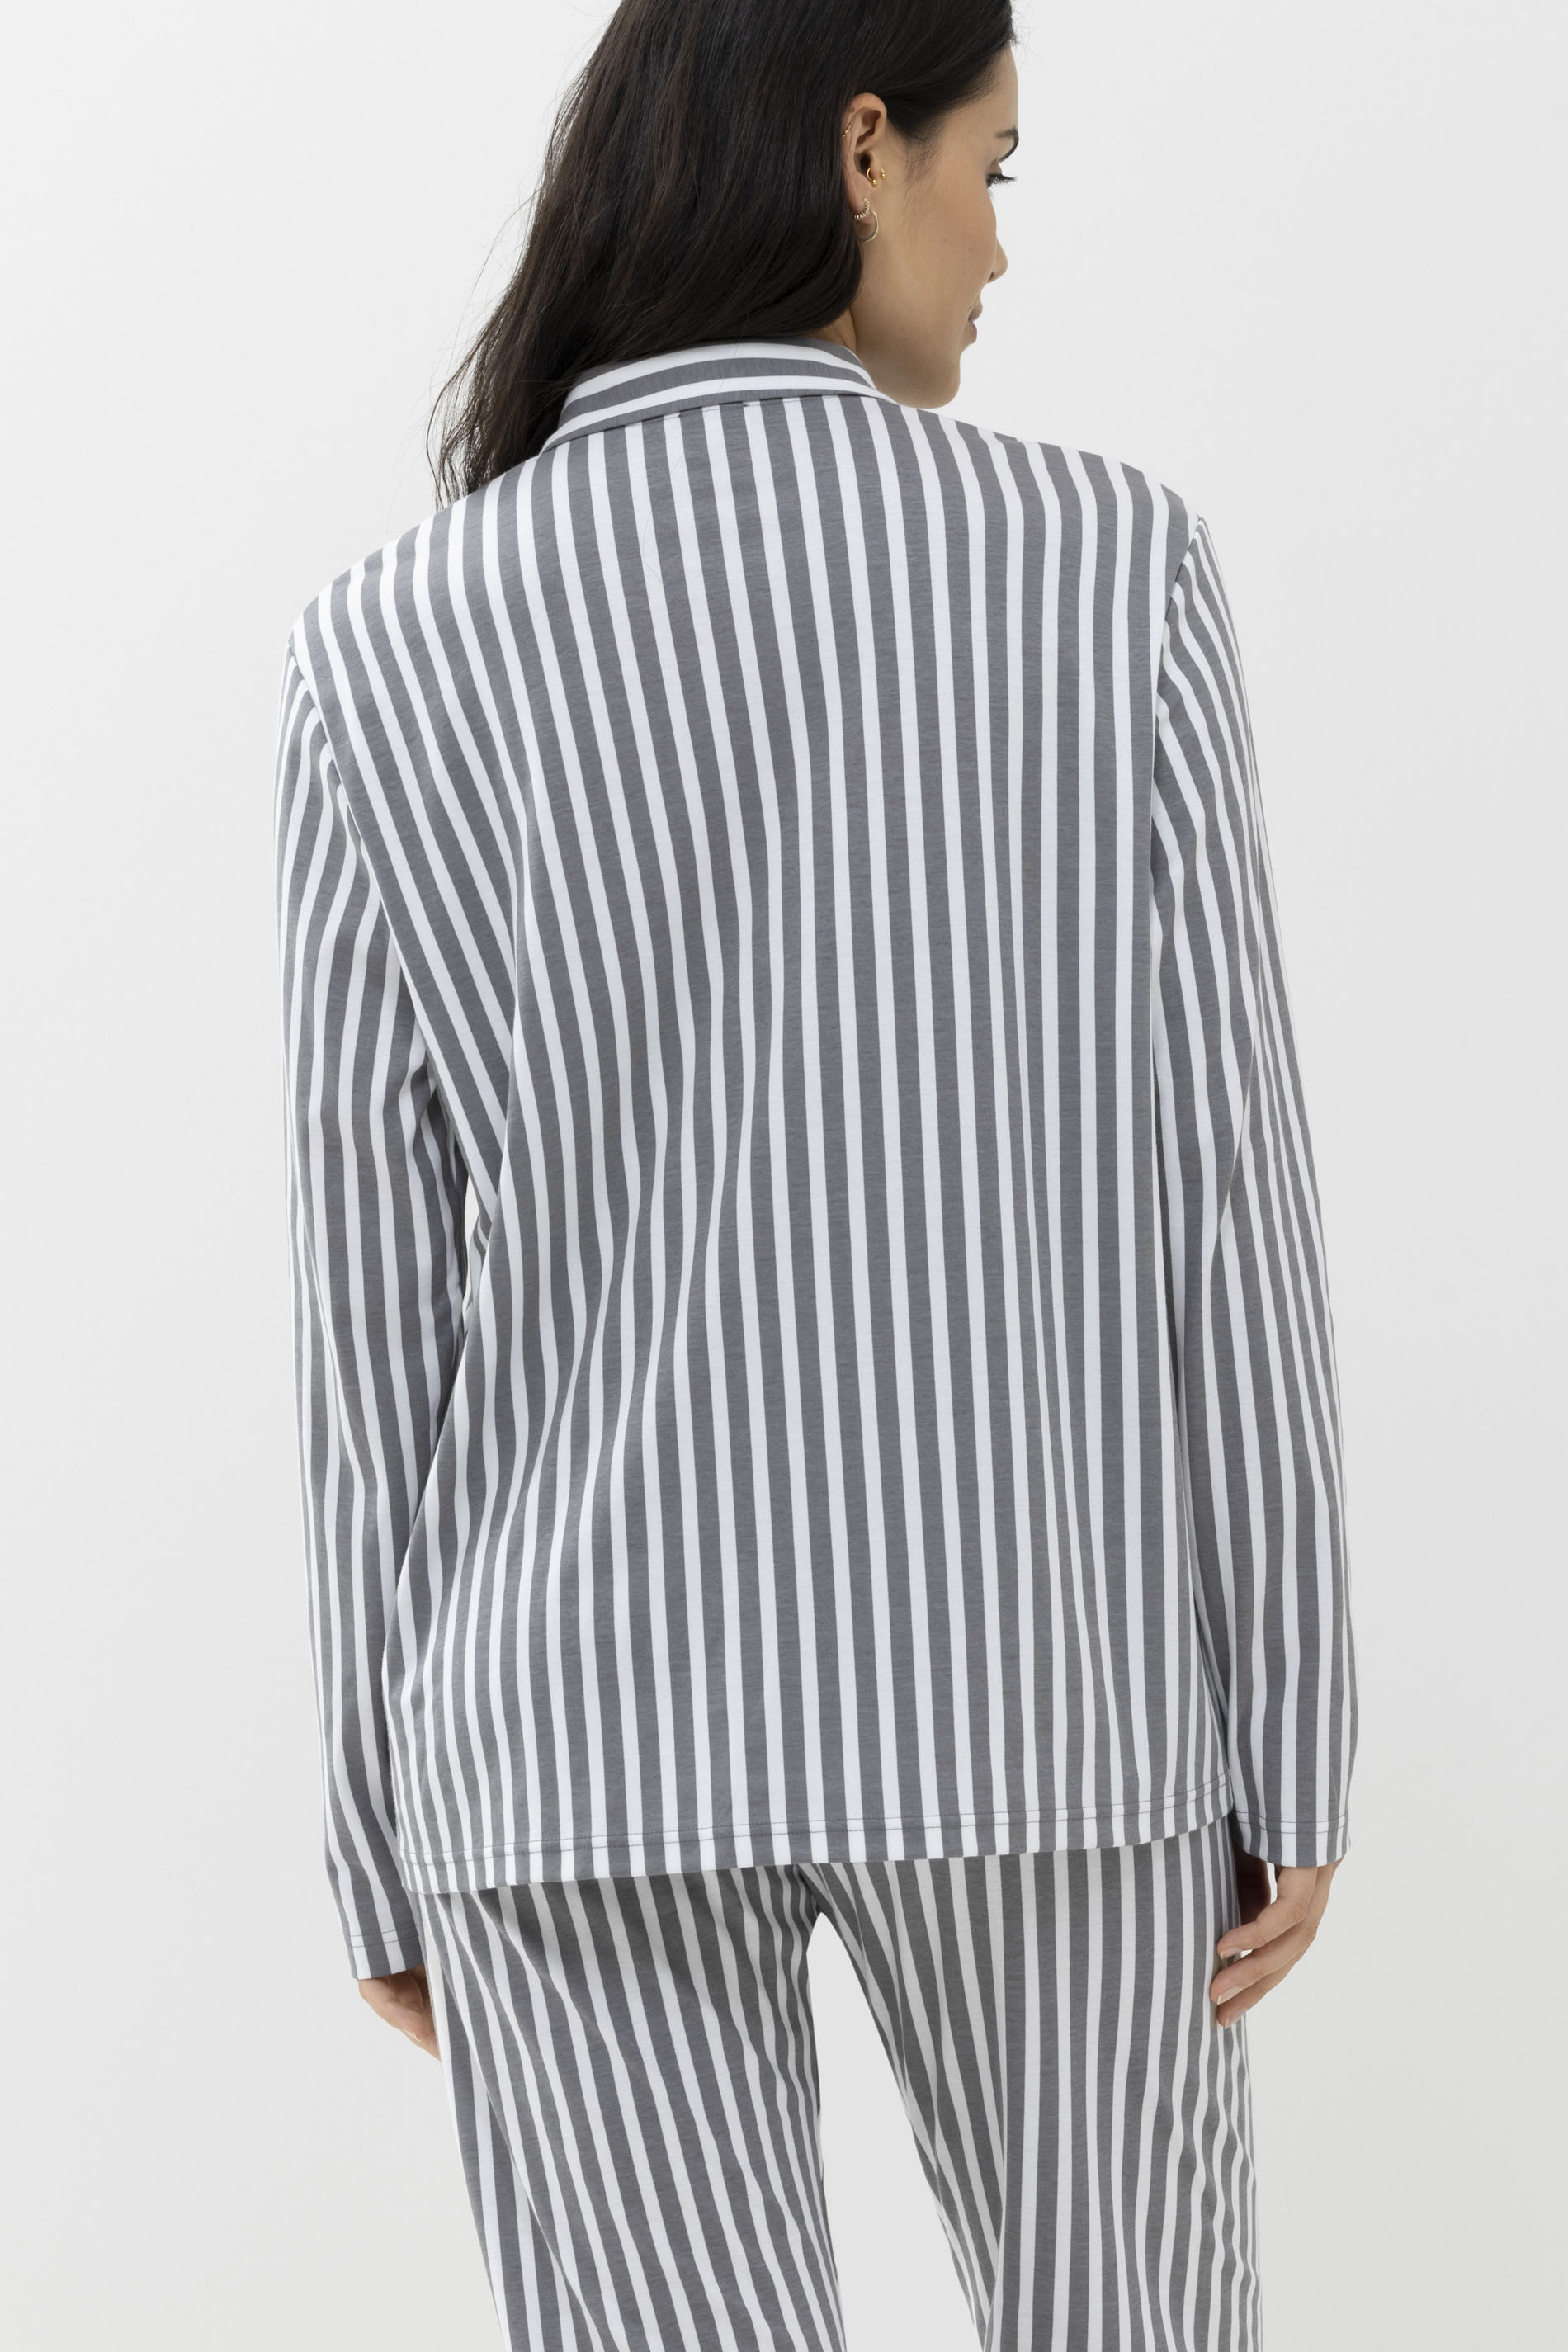 Pyjama Shirt Lovely Grey Serie Sleepsation Rückansicht | mey®